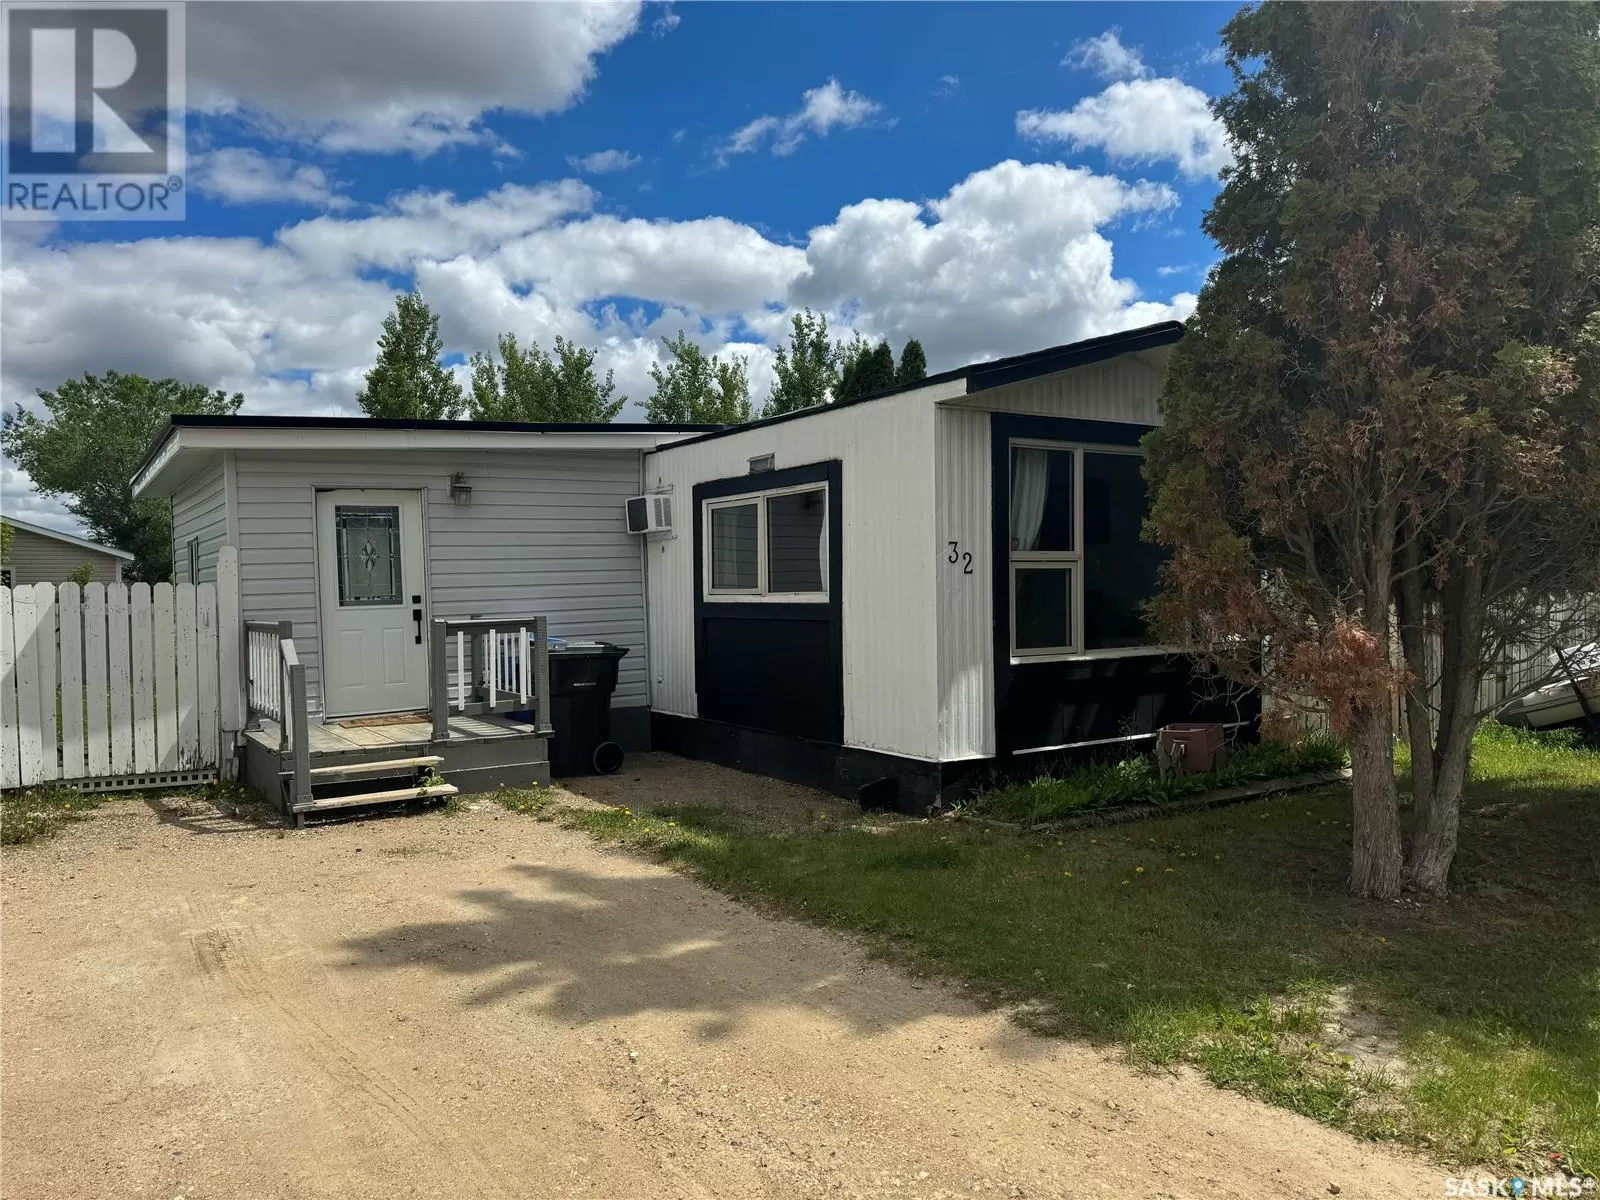 Mobile Home for rent: 32 Sycamore Drive, Sunset Estates, Saskatchewan S7K 3J9